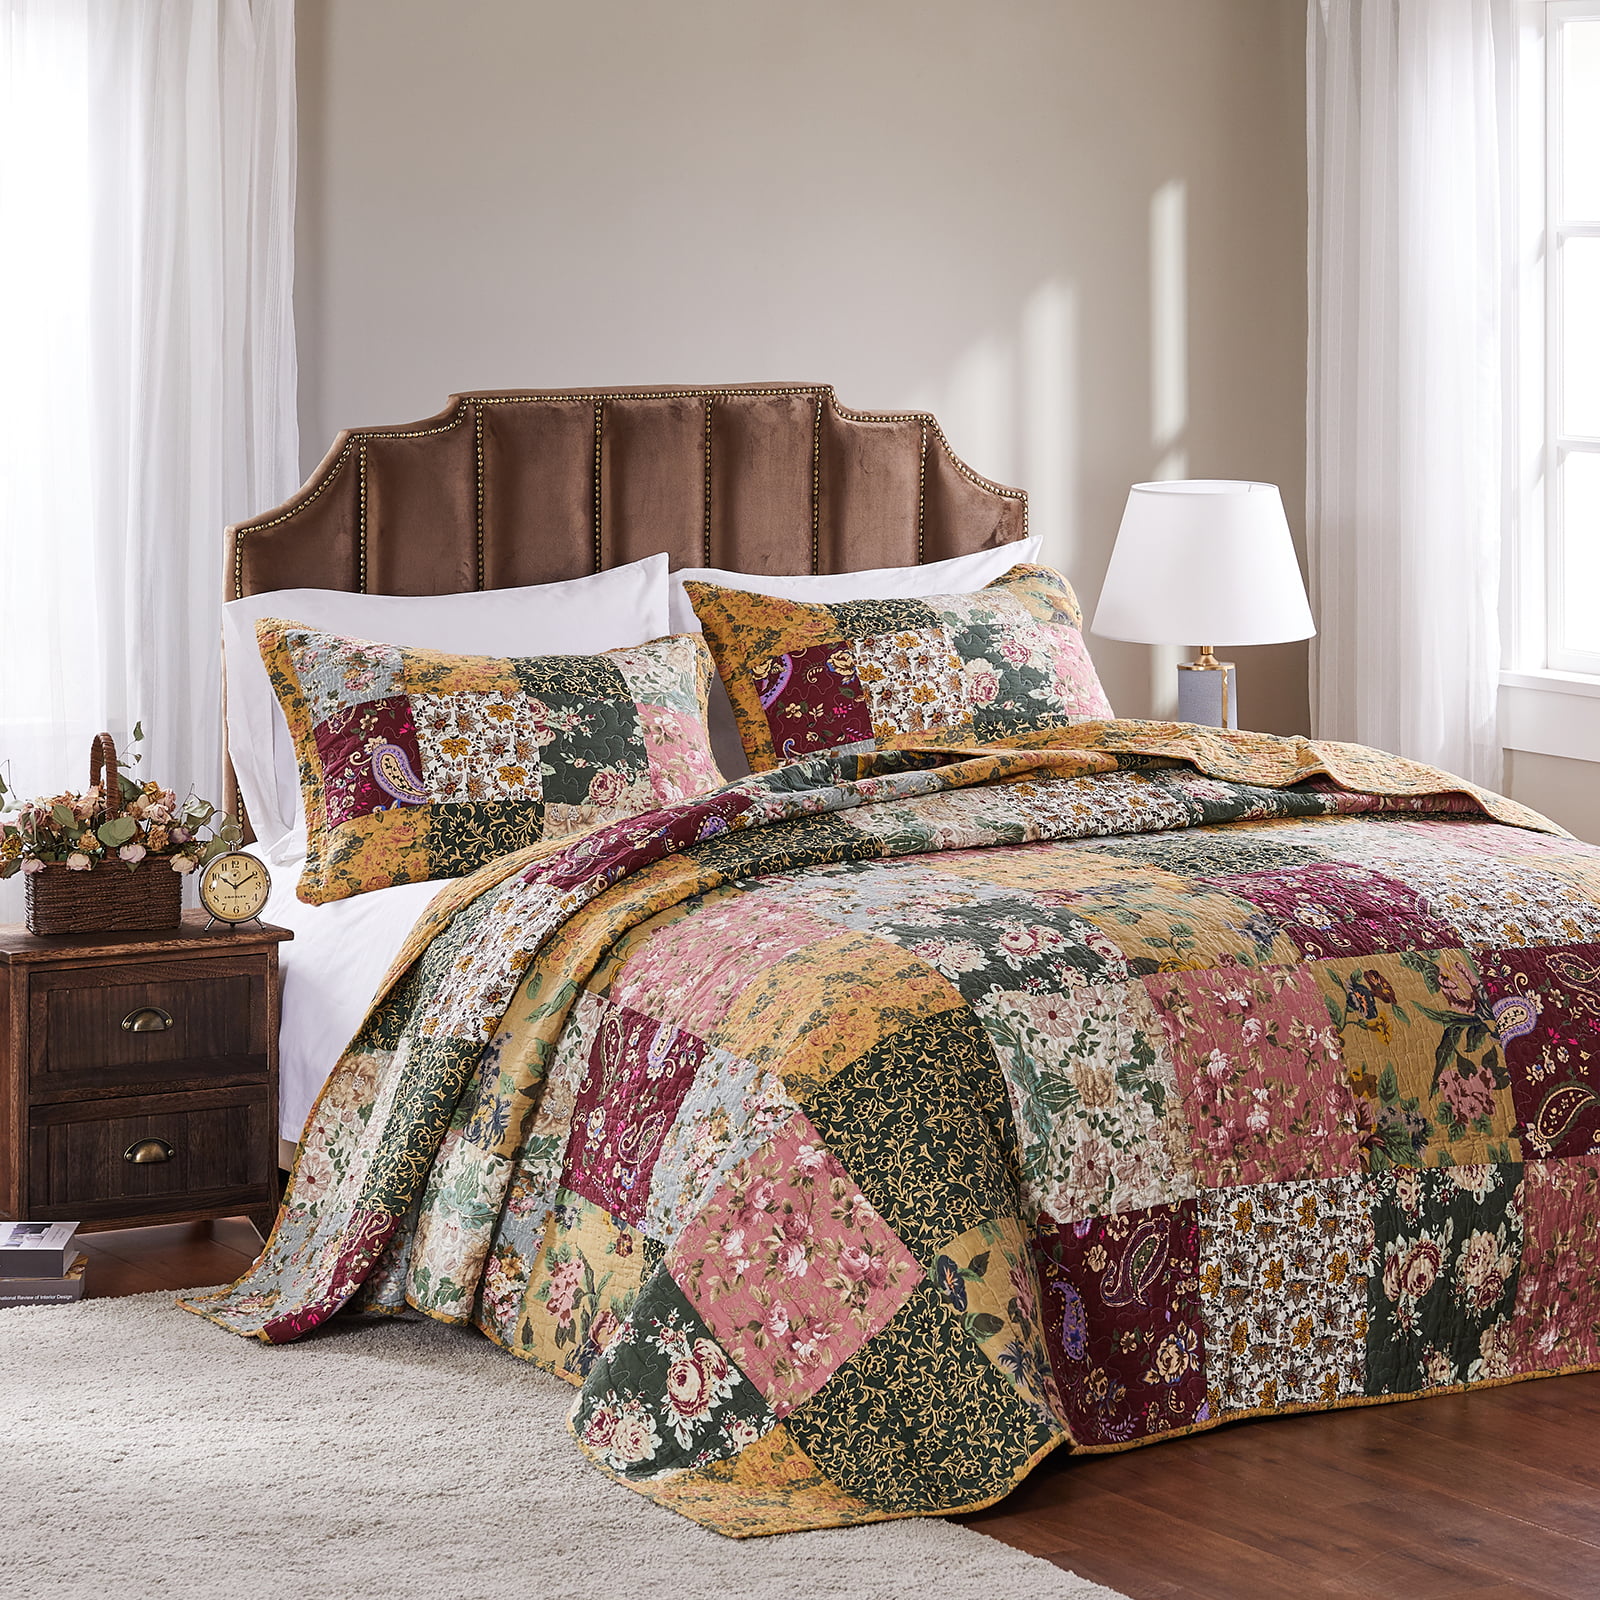 Details about   Quilted Bedspread Set Oversized Coverlet Floral Patchwork Beige Rust Light Blue 